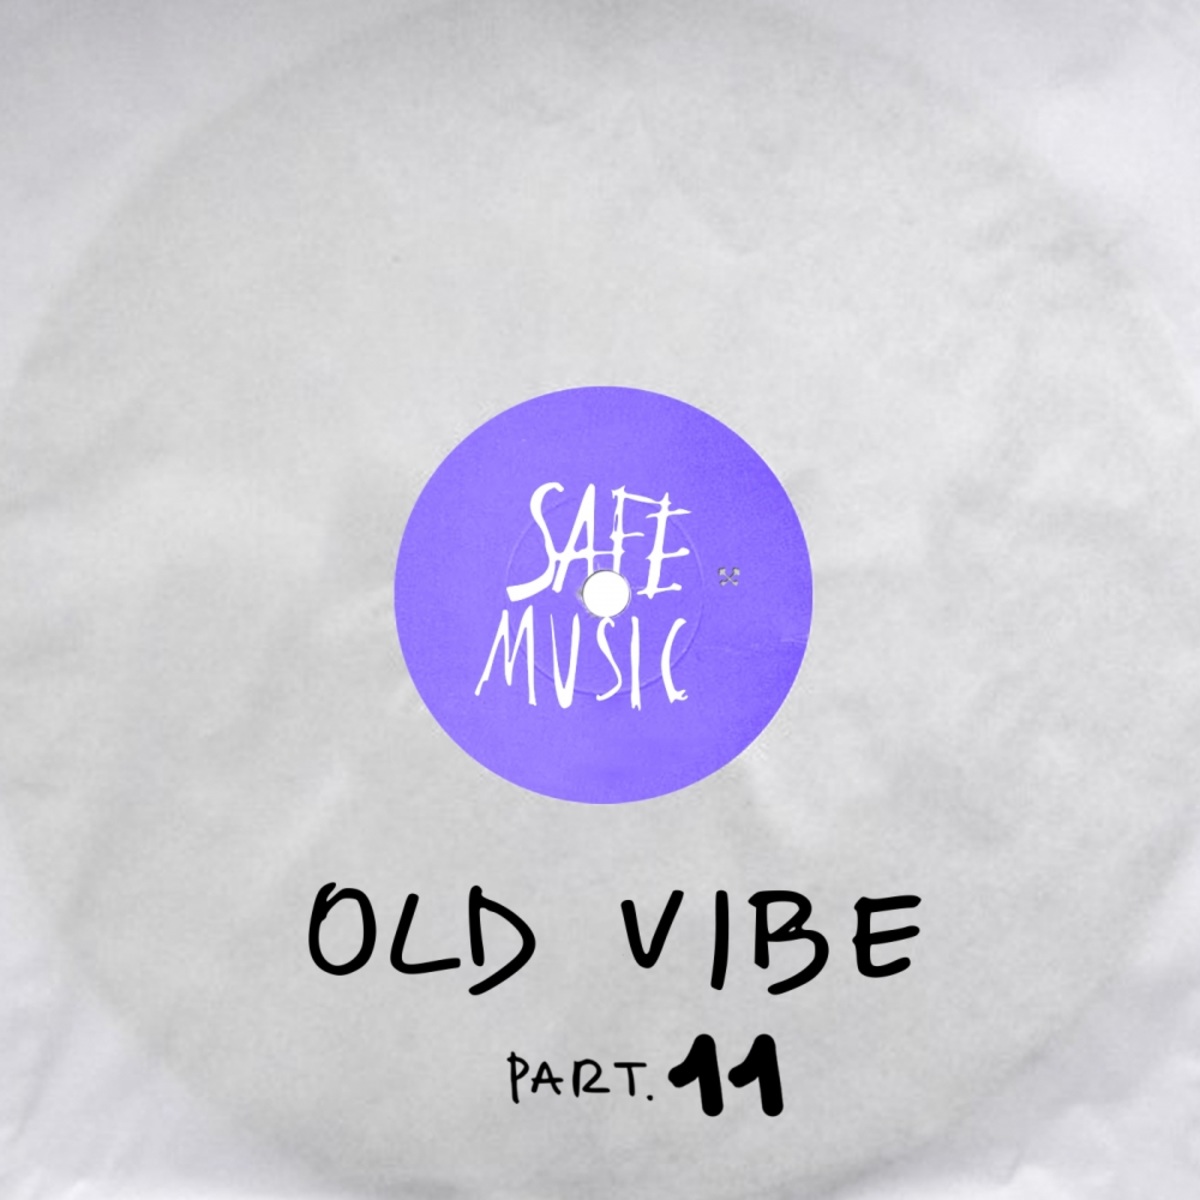 VA - Old Vibe, Pt.11 / SAFE MUSIC